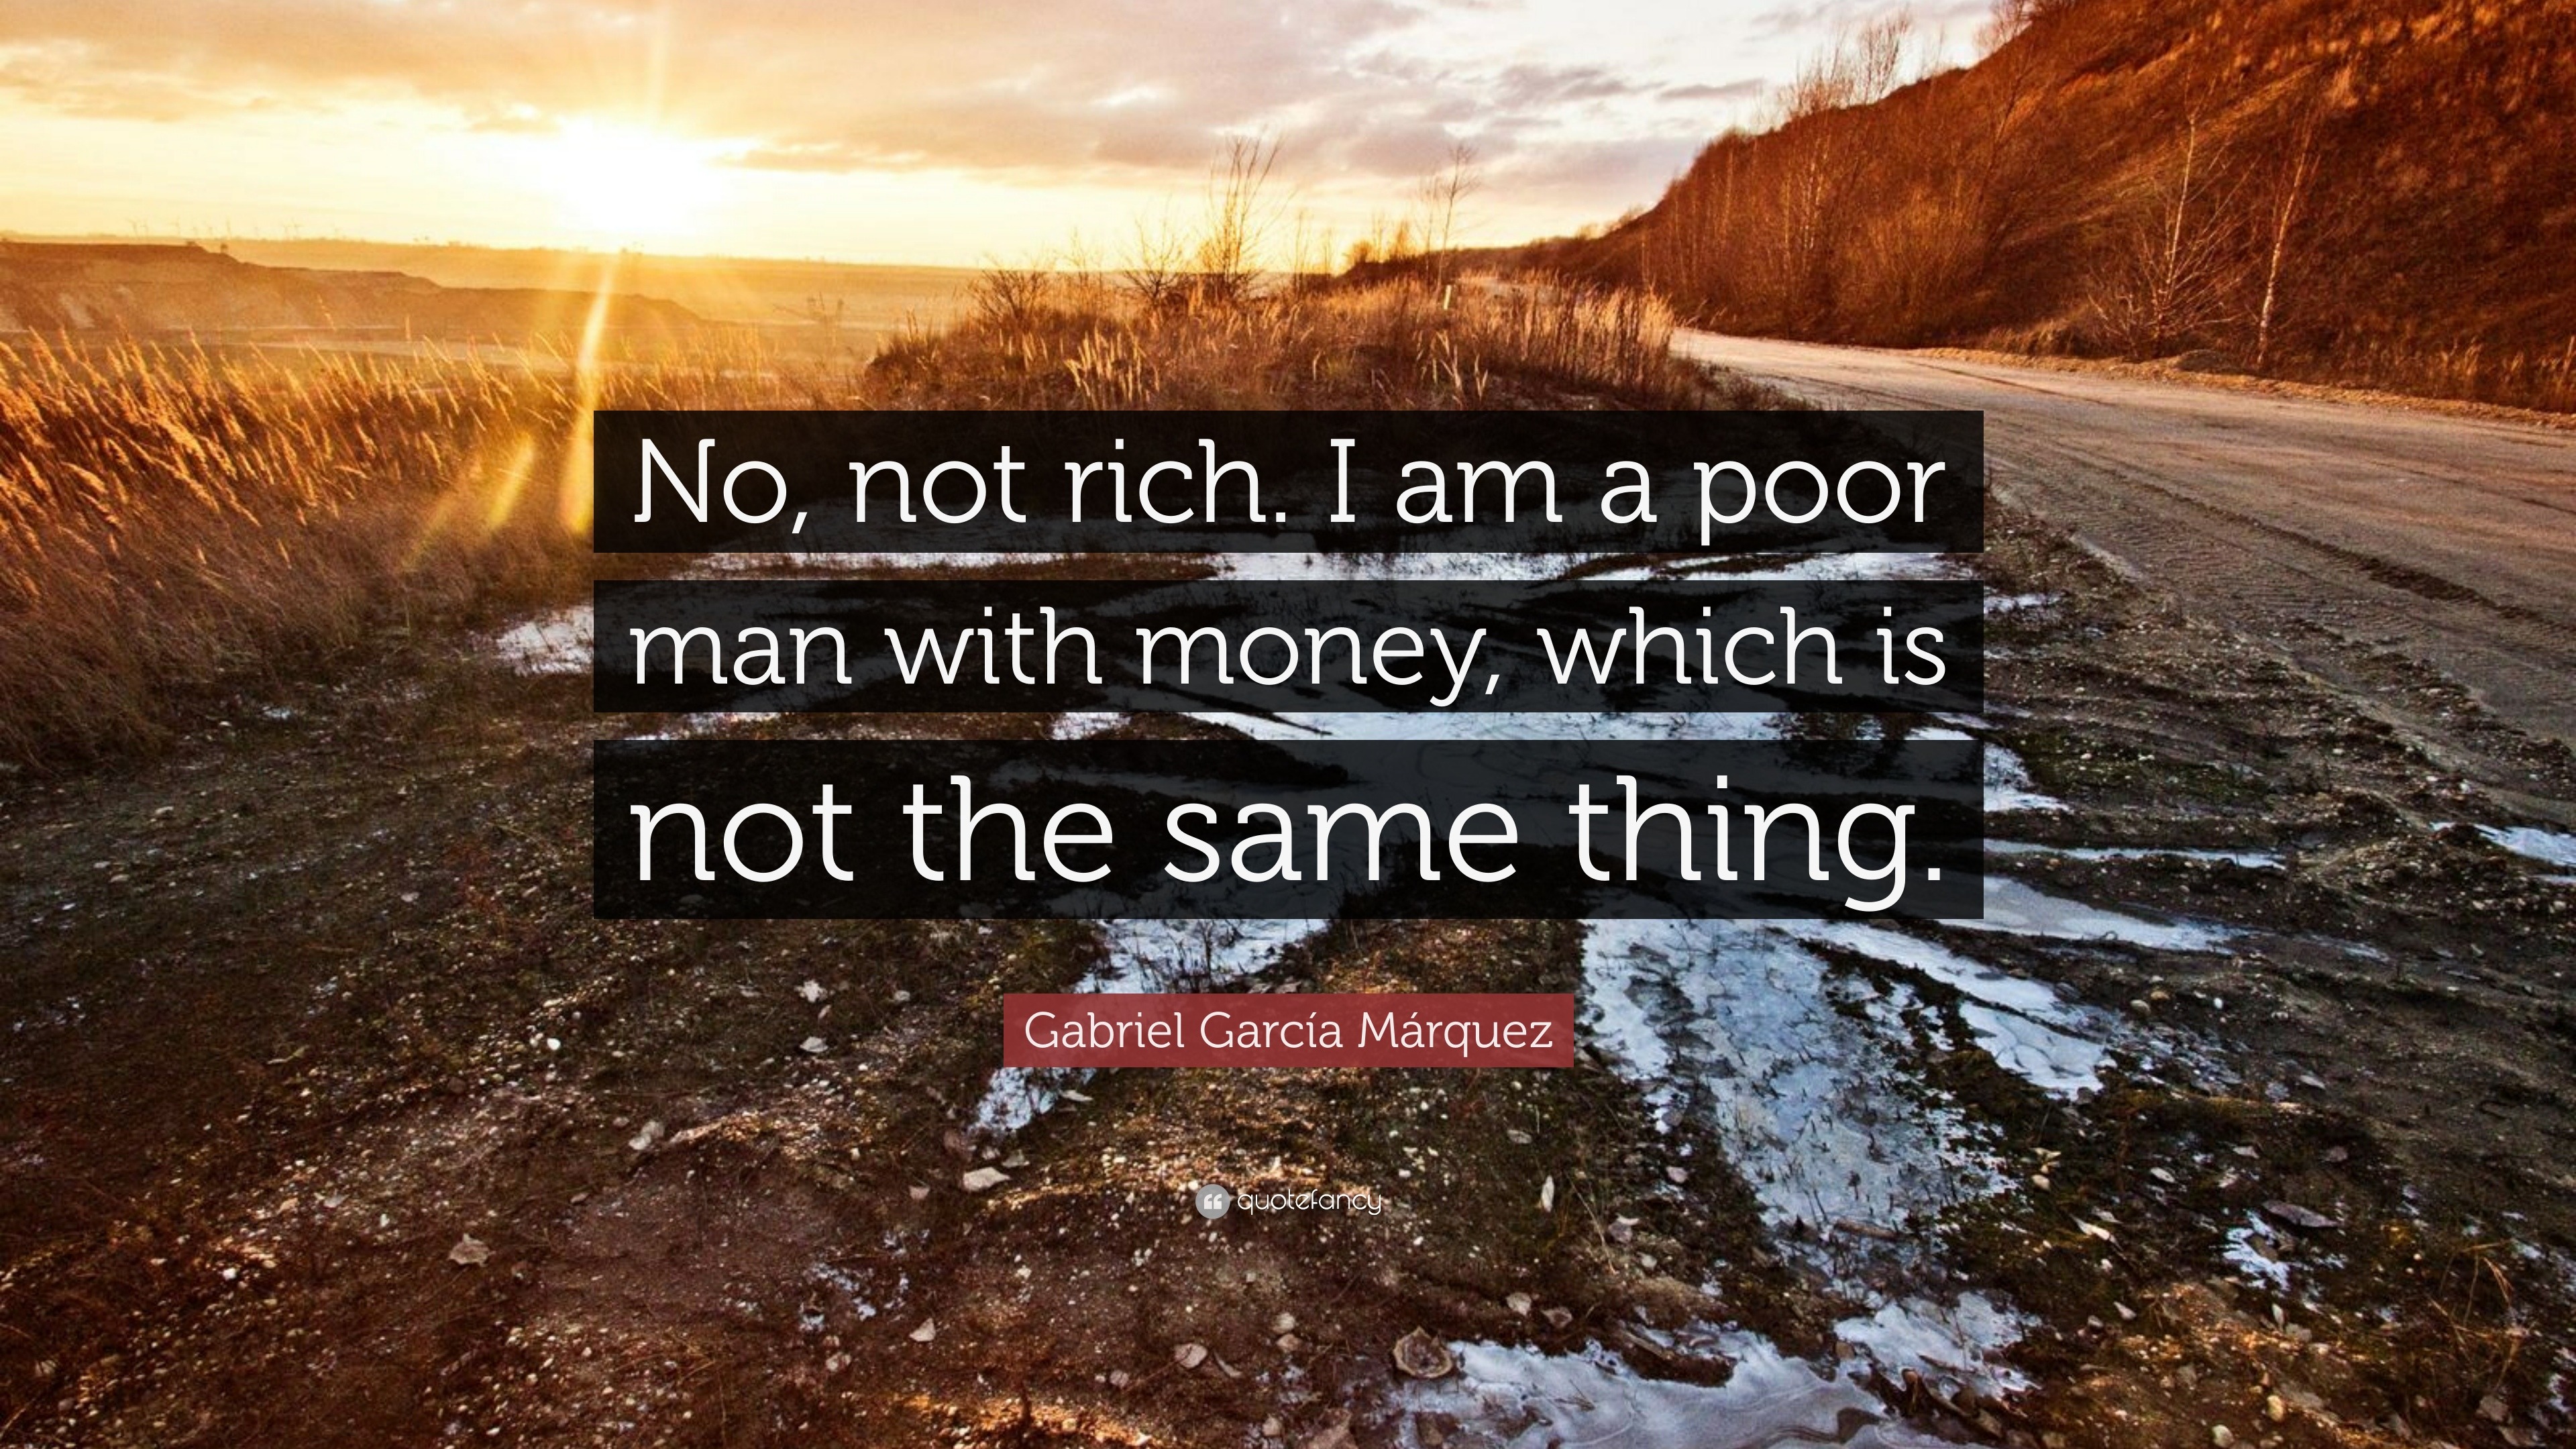 Gabriel Garc­a Márquez Quote “No not rich I am a poor man